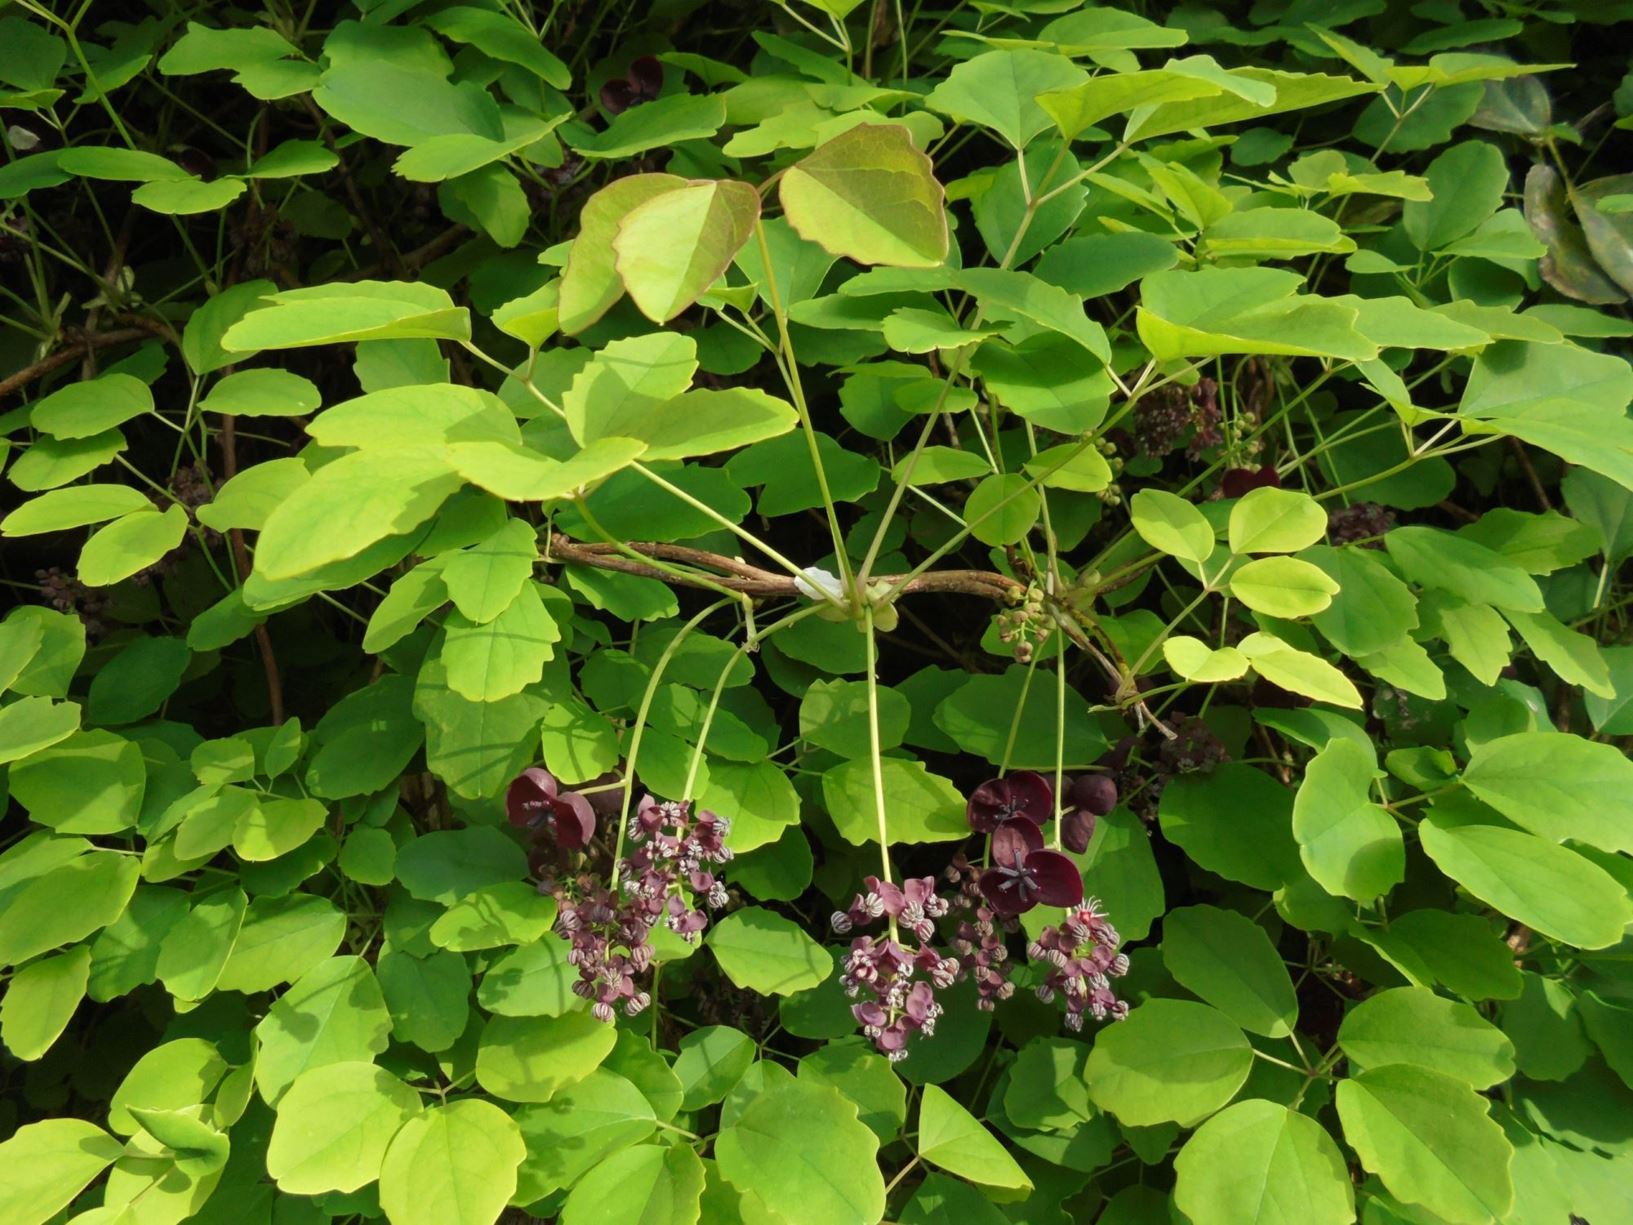 Akebia × pentaphylla - Chocolate vine, Akebi